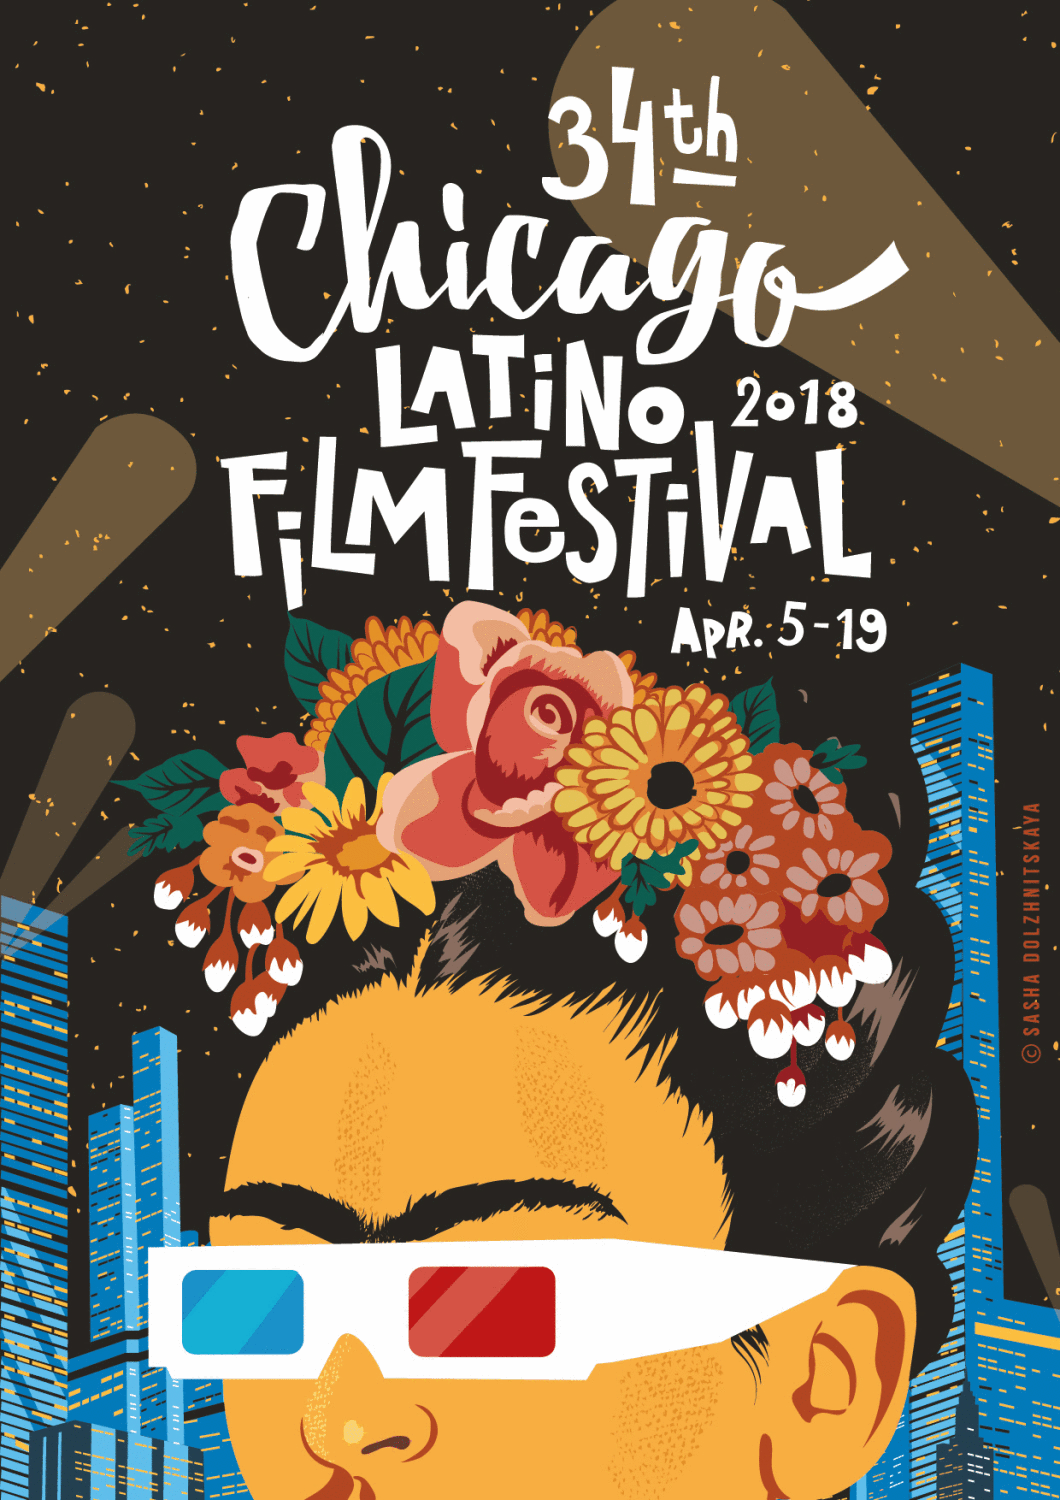 Chicago Latino Film Festival Poster Contest. poster film festival contest